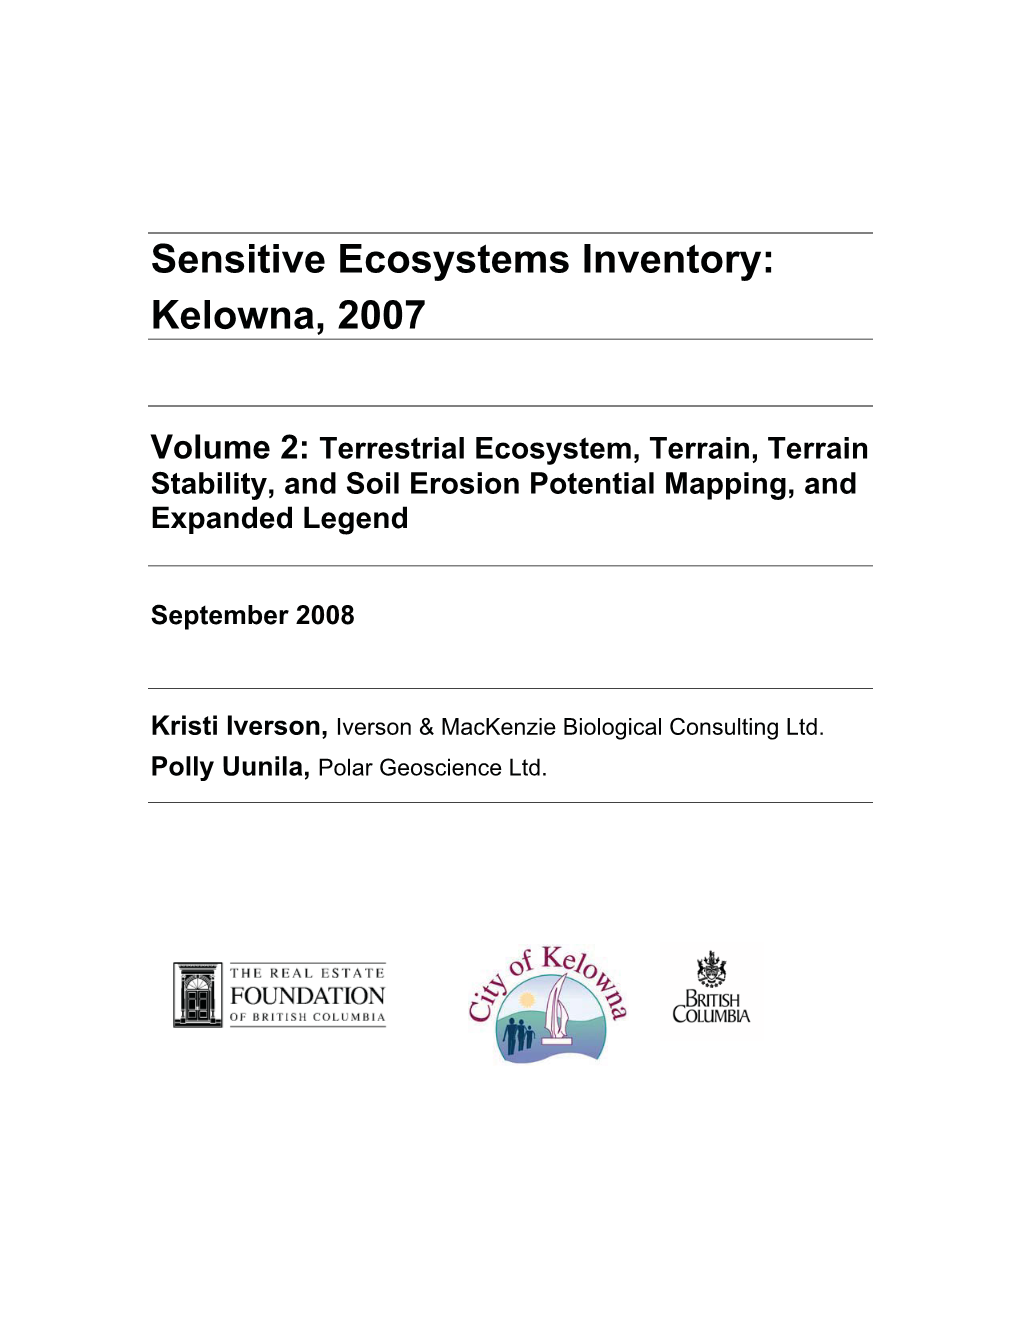 Sensitive Ecosystems Inventory: Kelowna, 2007